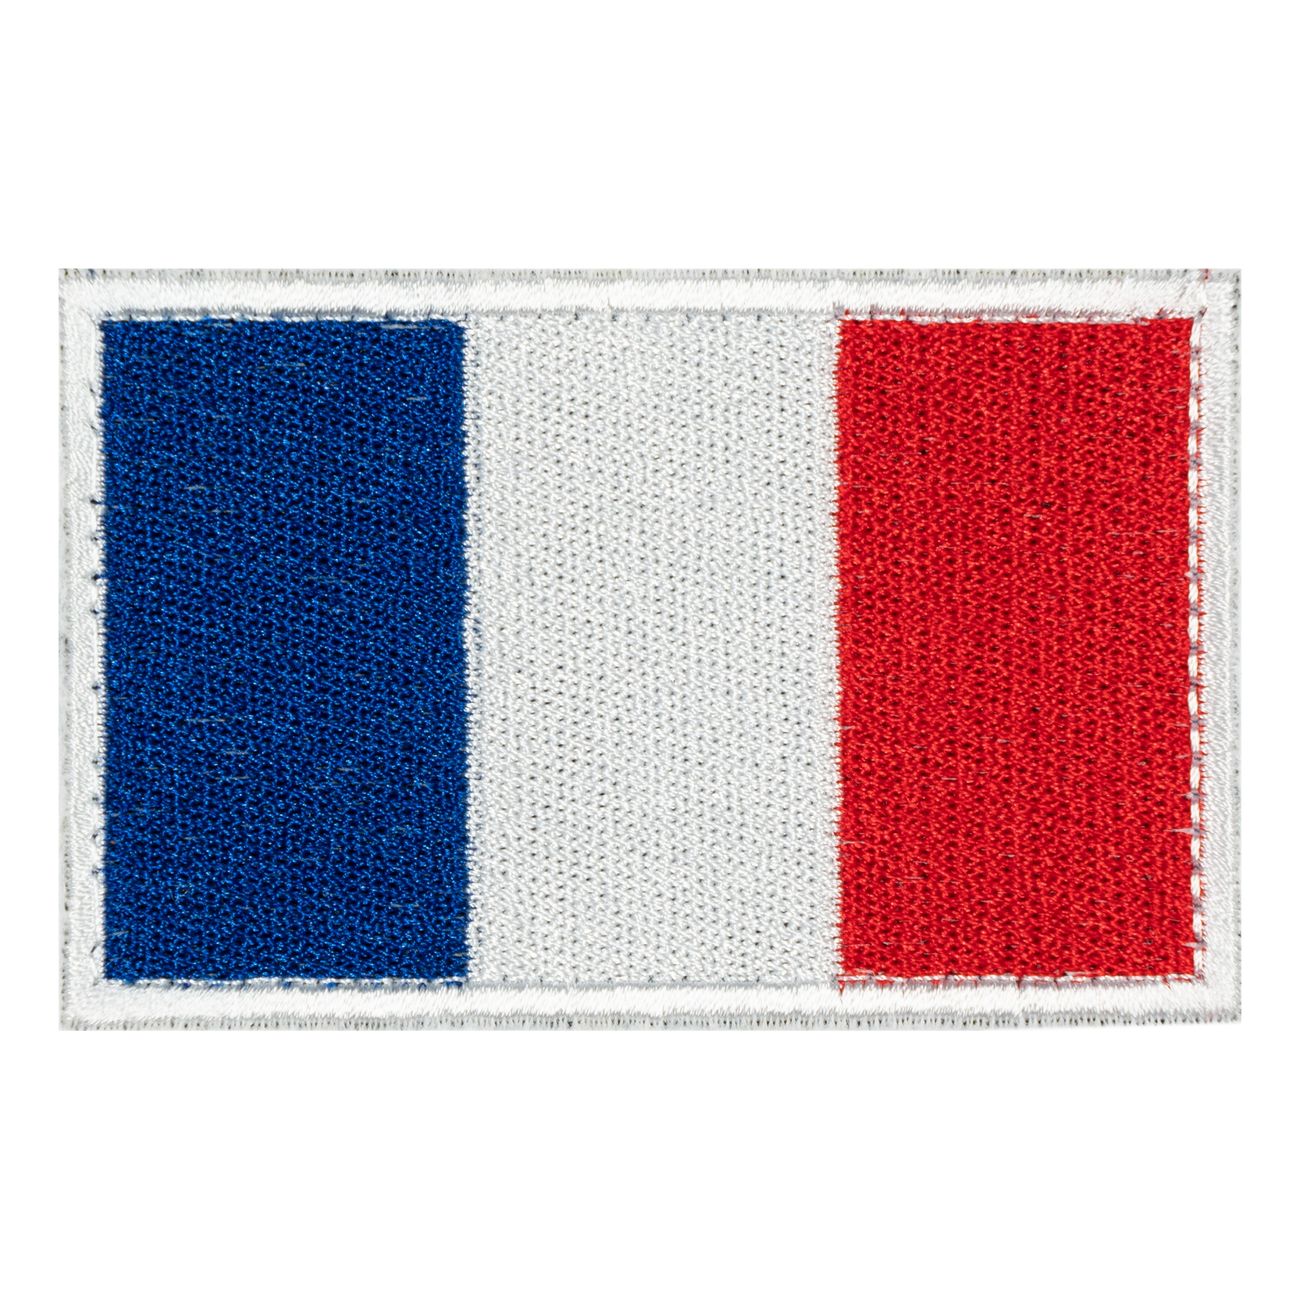 tygmarke-franska-flaggan-92014-1